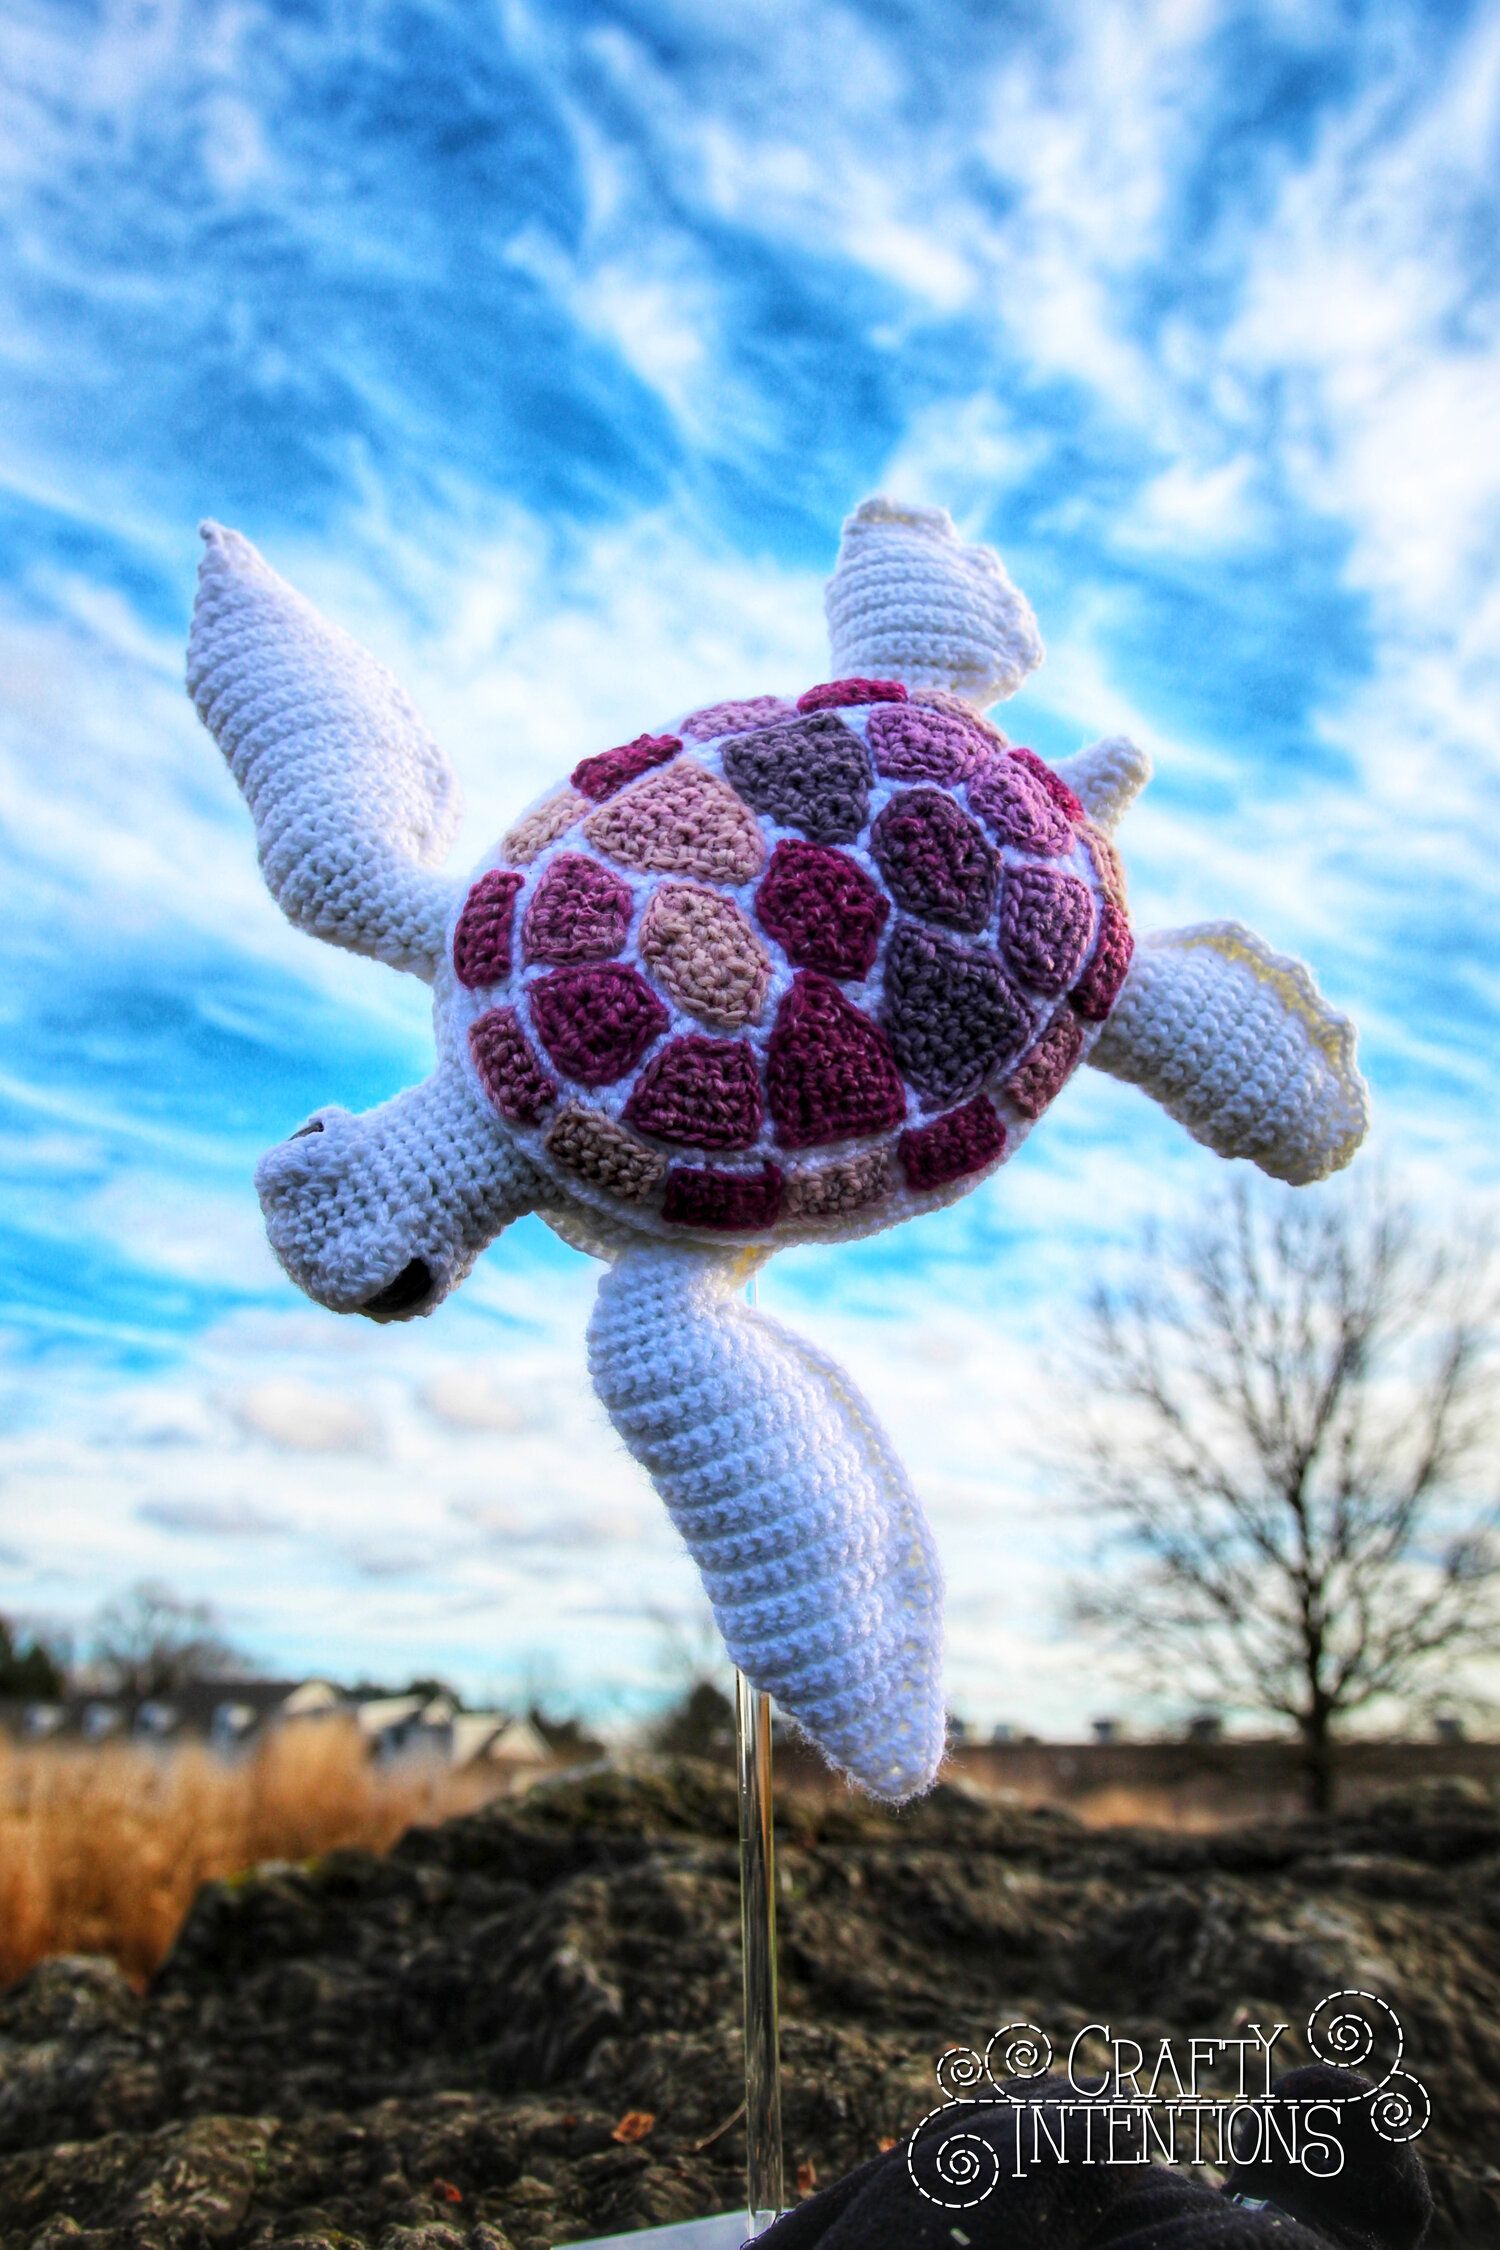 A stuffed animal turtle on top of something - Sea turtle